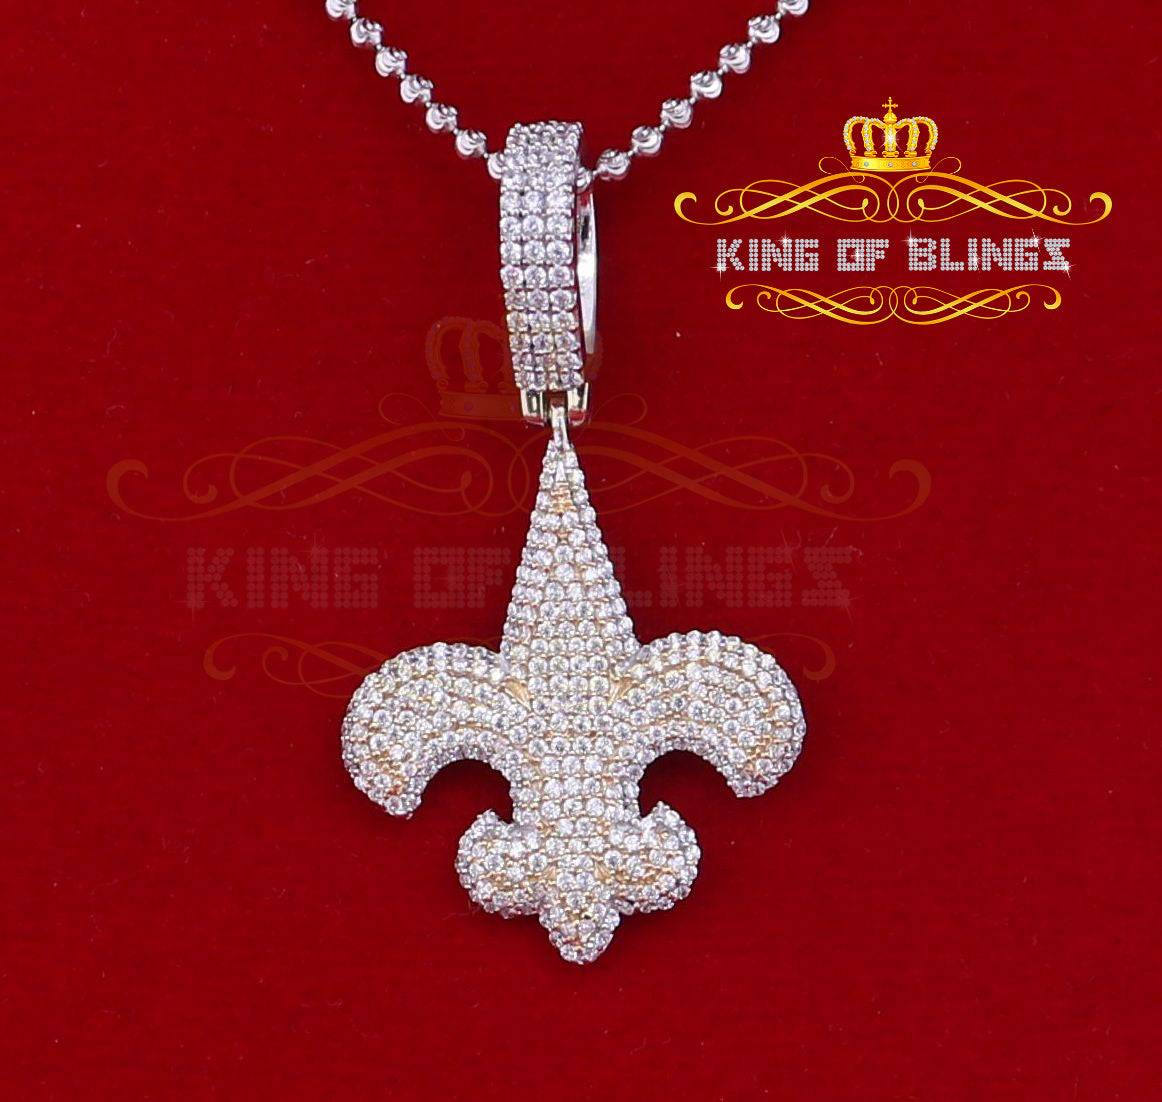 King of Blings- Fancy 925 Sterling Silver Fleur de Lis White Pendant 7.04ct Cubic Zirconia KING OF BLINGS